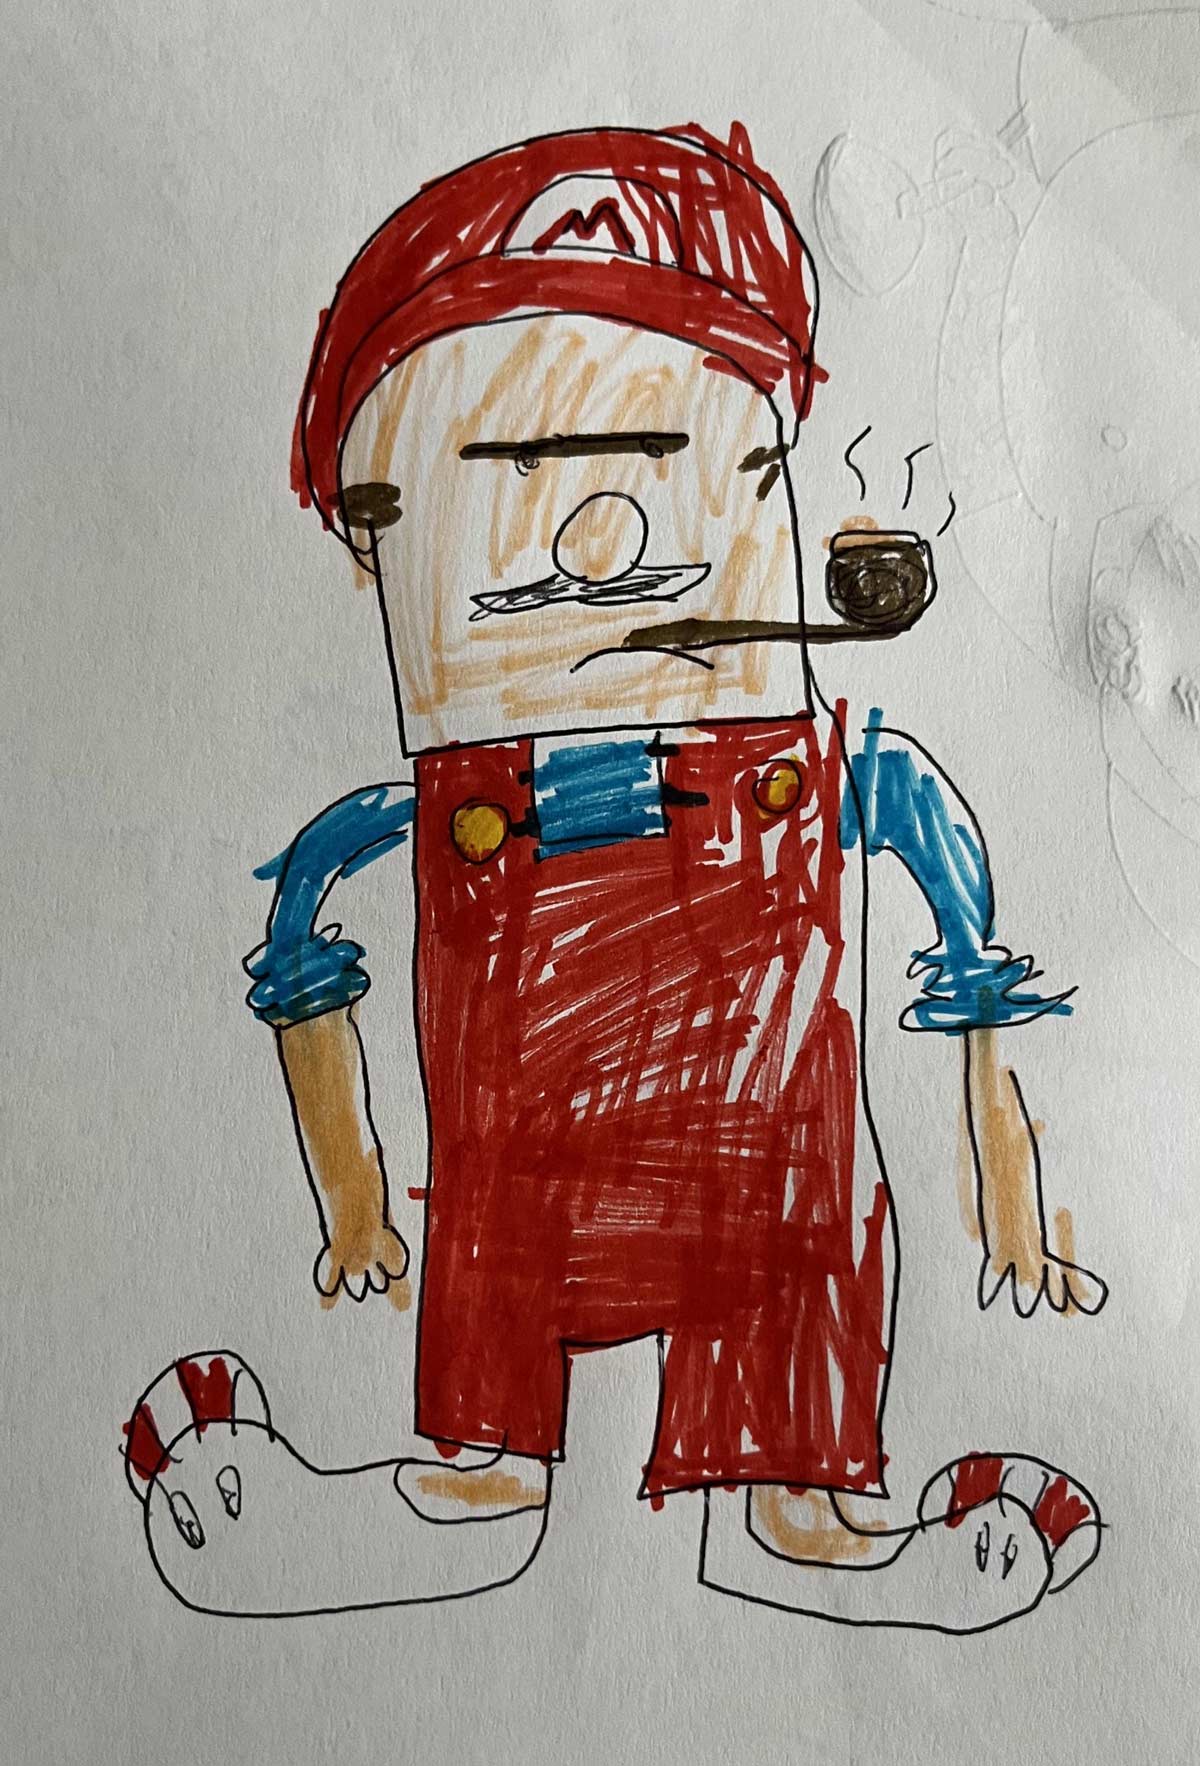 My 6 year old drew a bootleg Mario